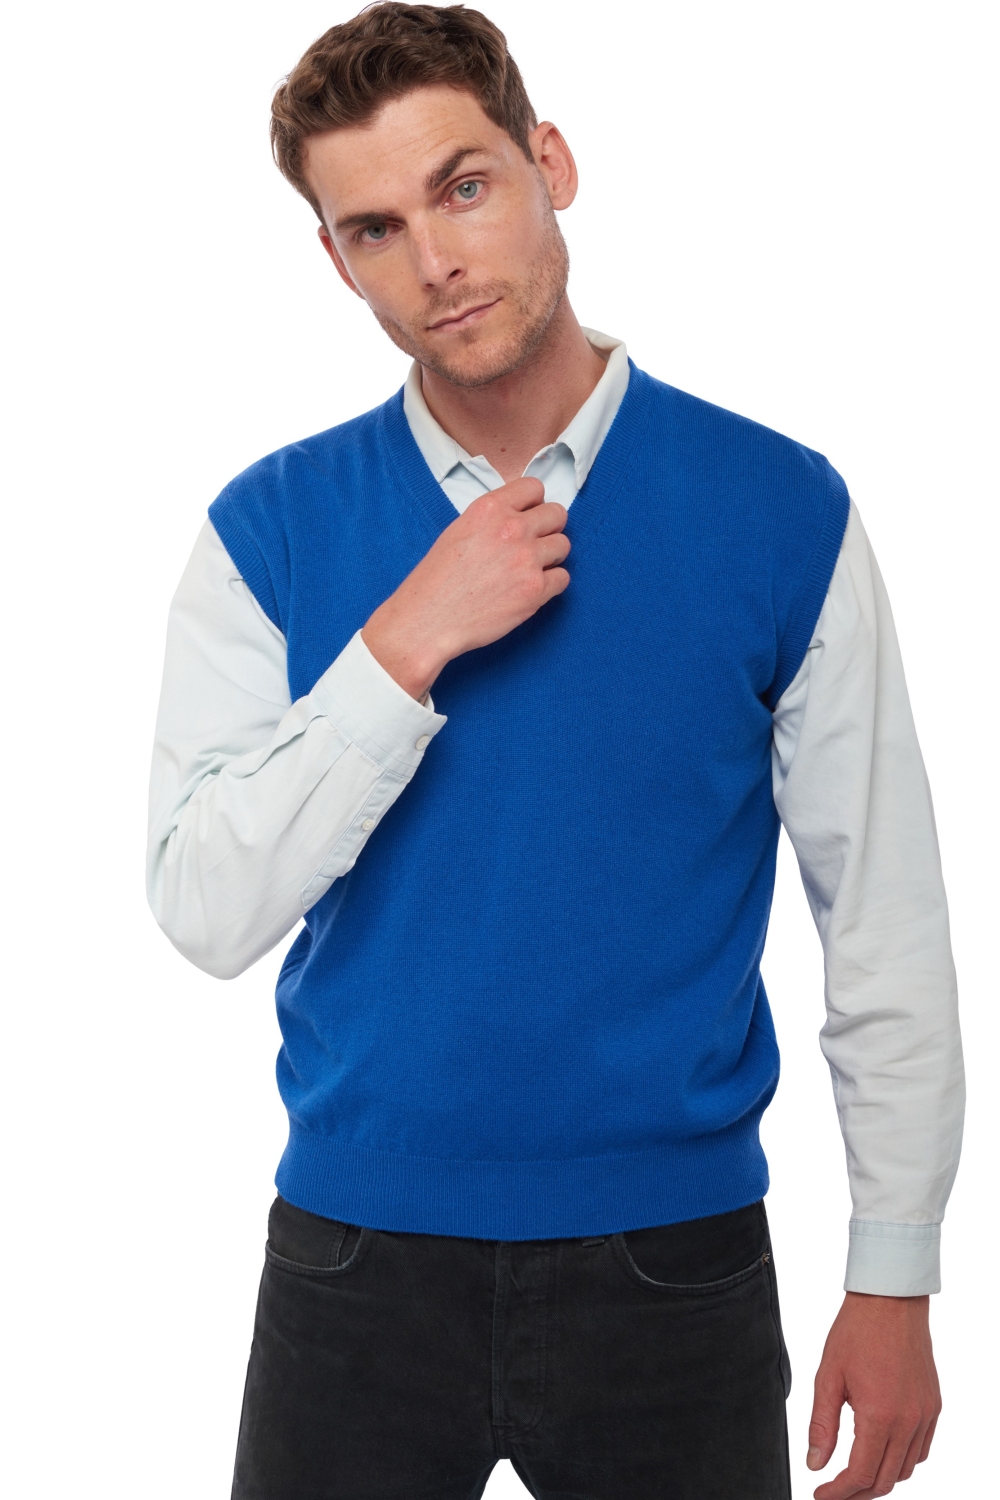 Cashmere men waistcoat sleeveless sweaters balthazar lapis blue 2xl